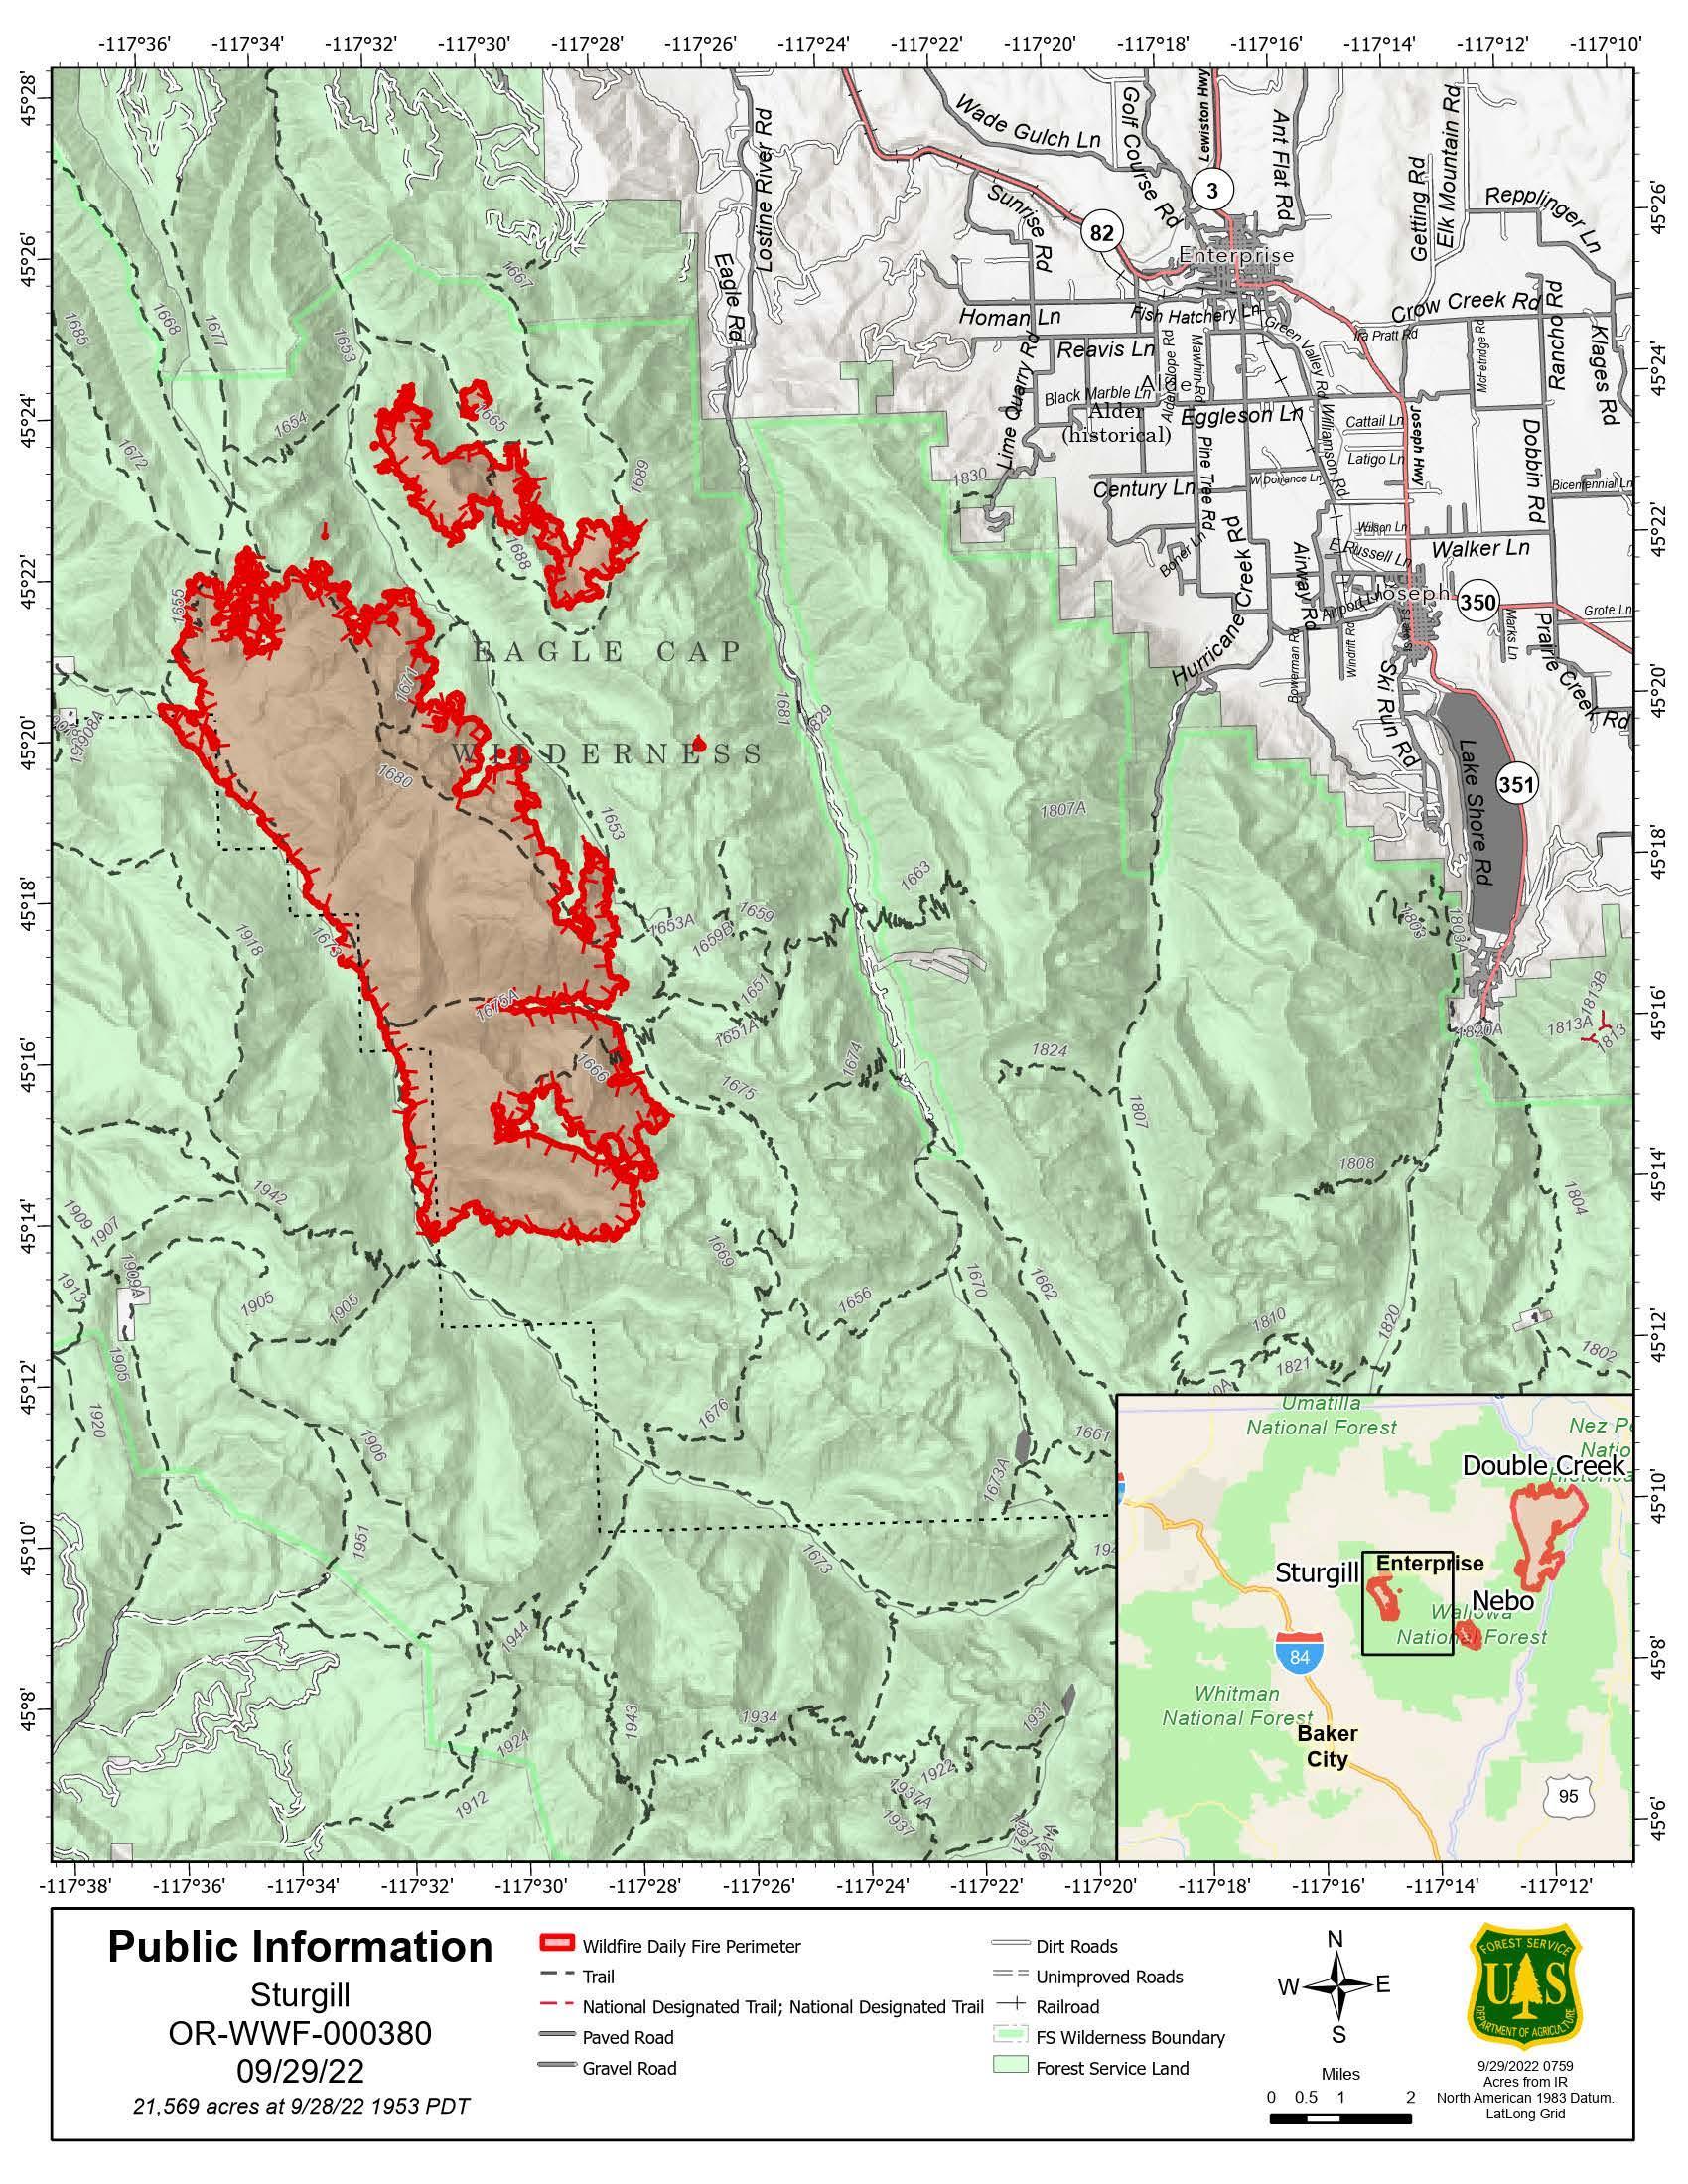 Sturgill Fire Map - 09/29/2022